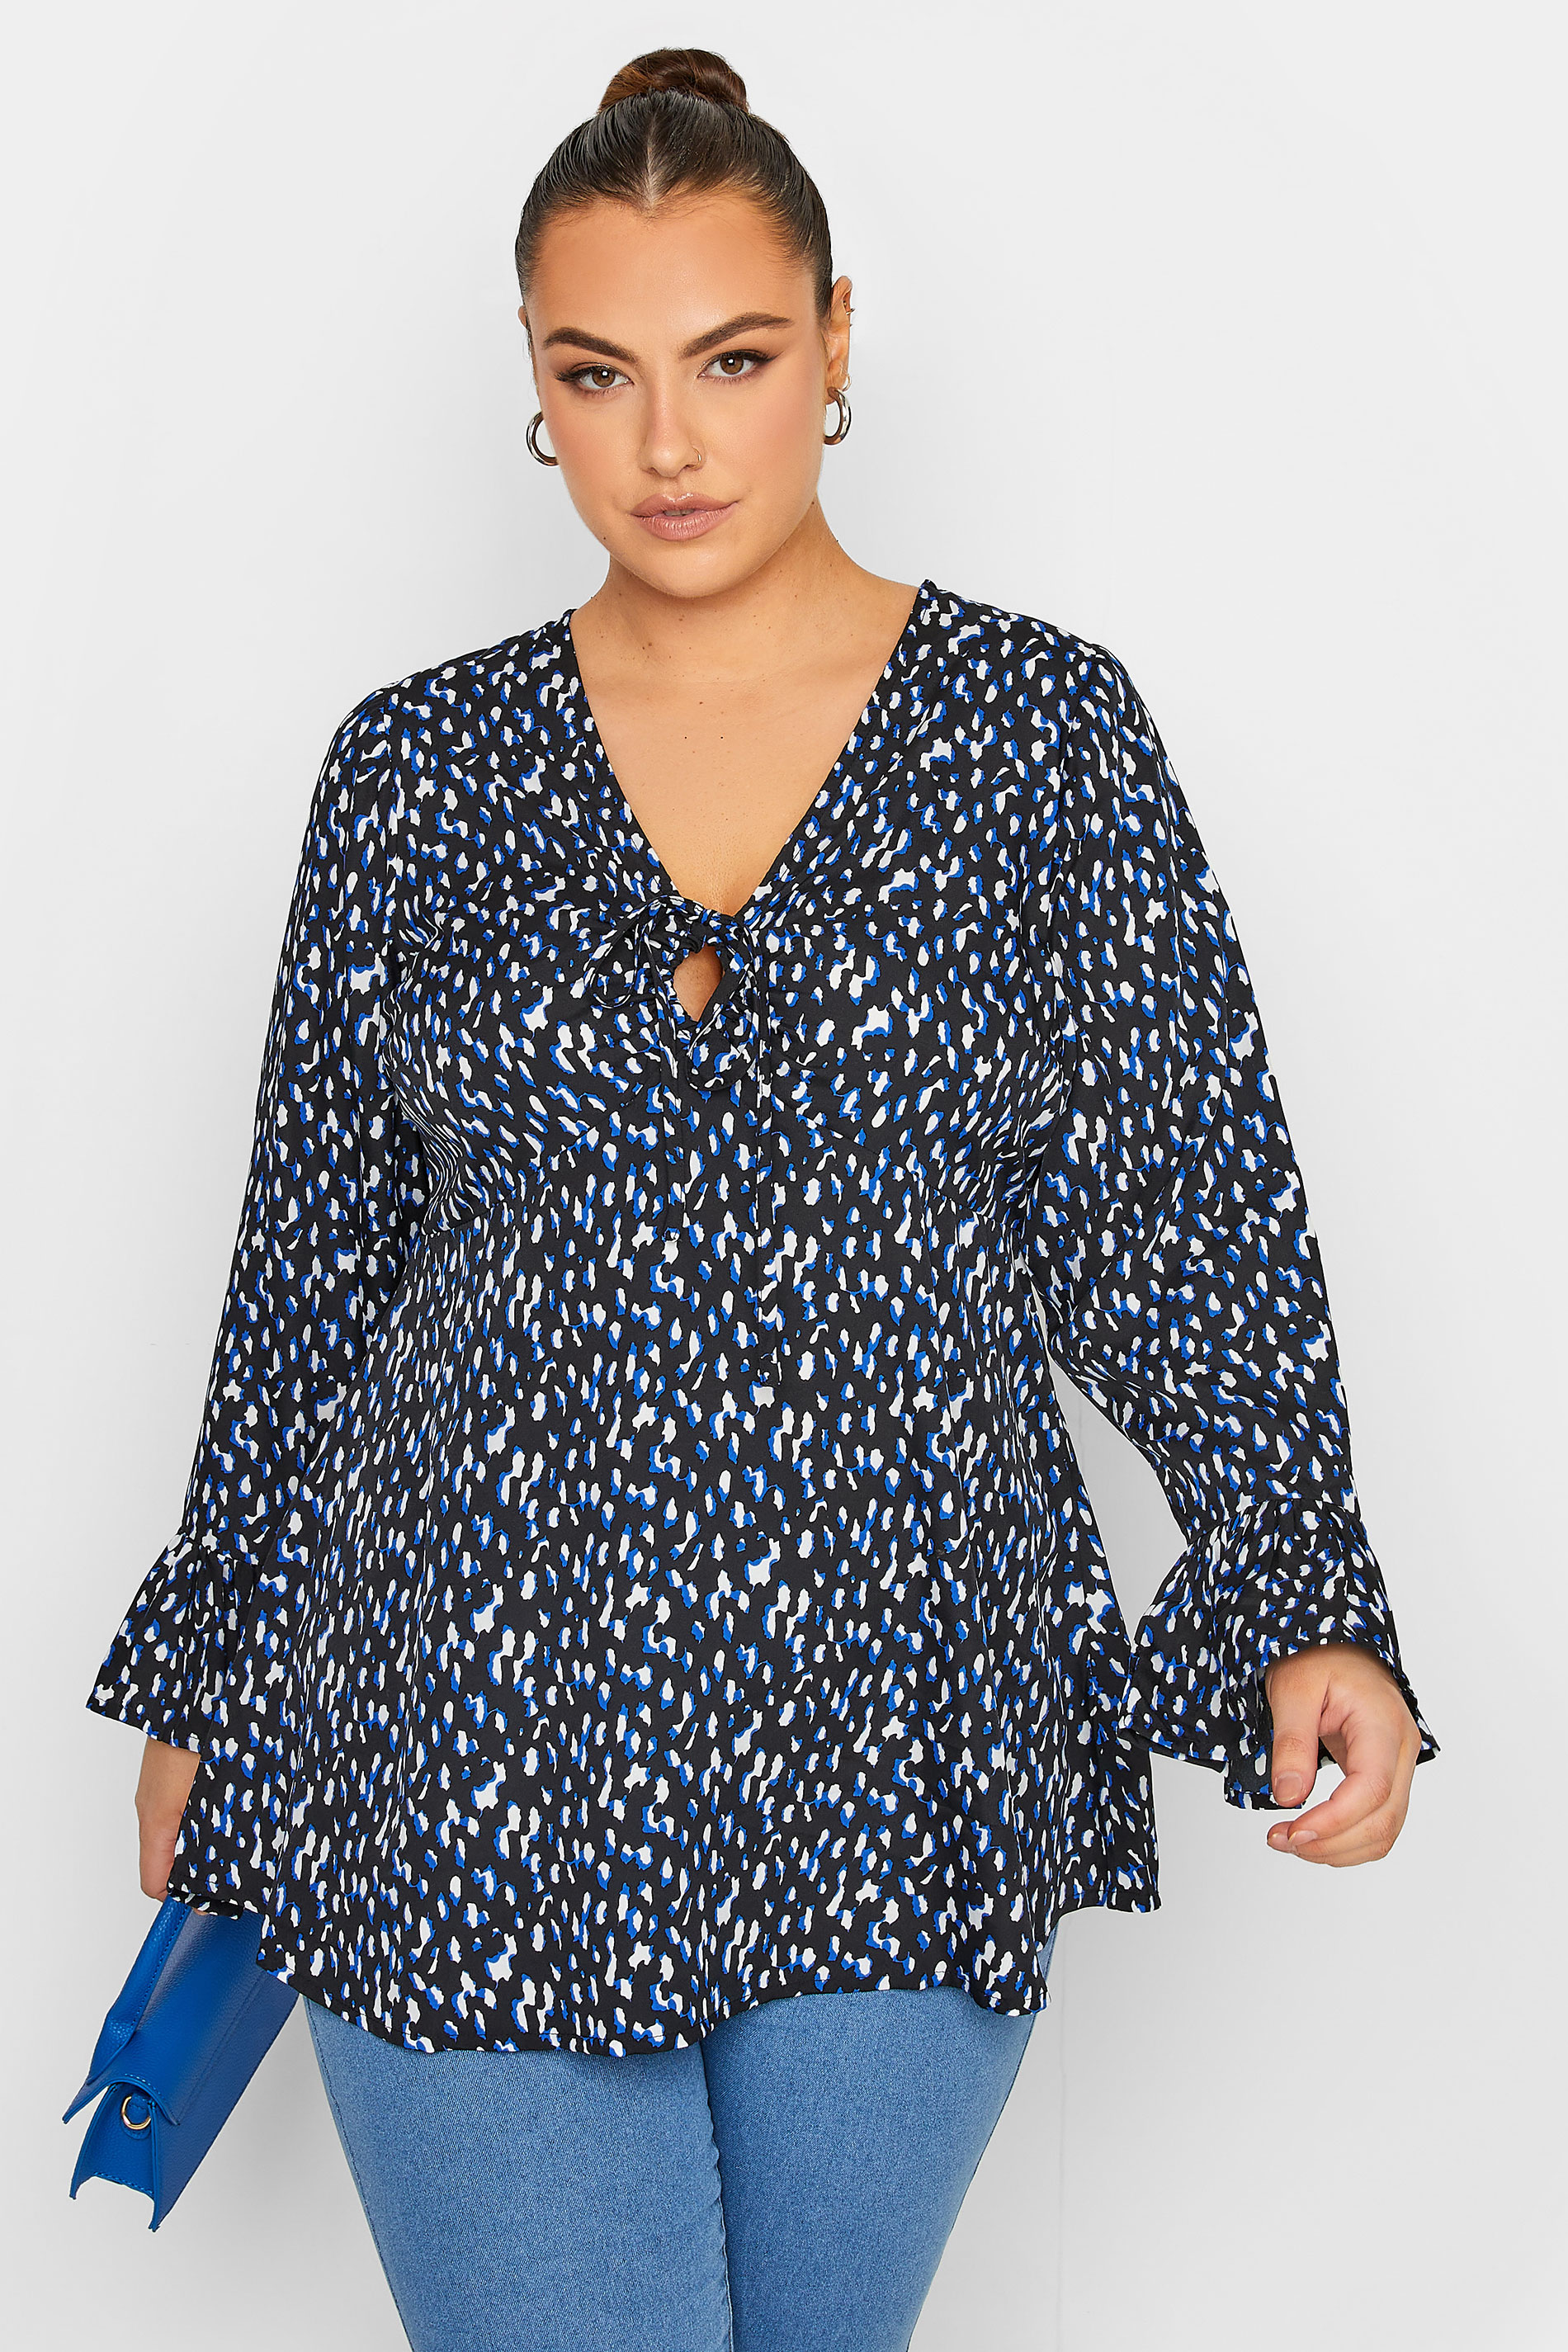 LIMITED COLLECTION Plus Size Curve Blue Dalmatian Print Blouse | Yours Clothing 1